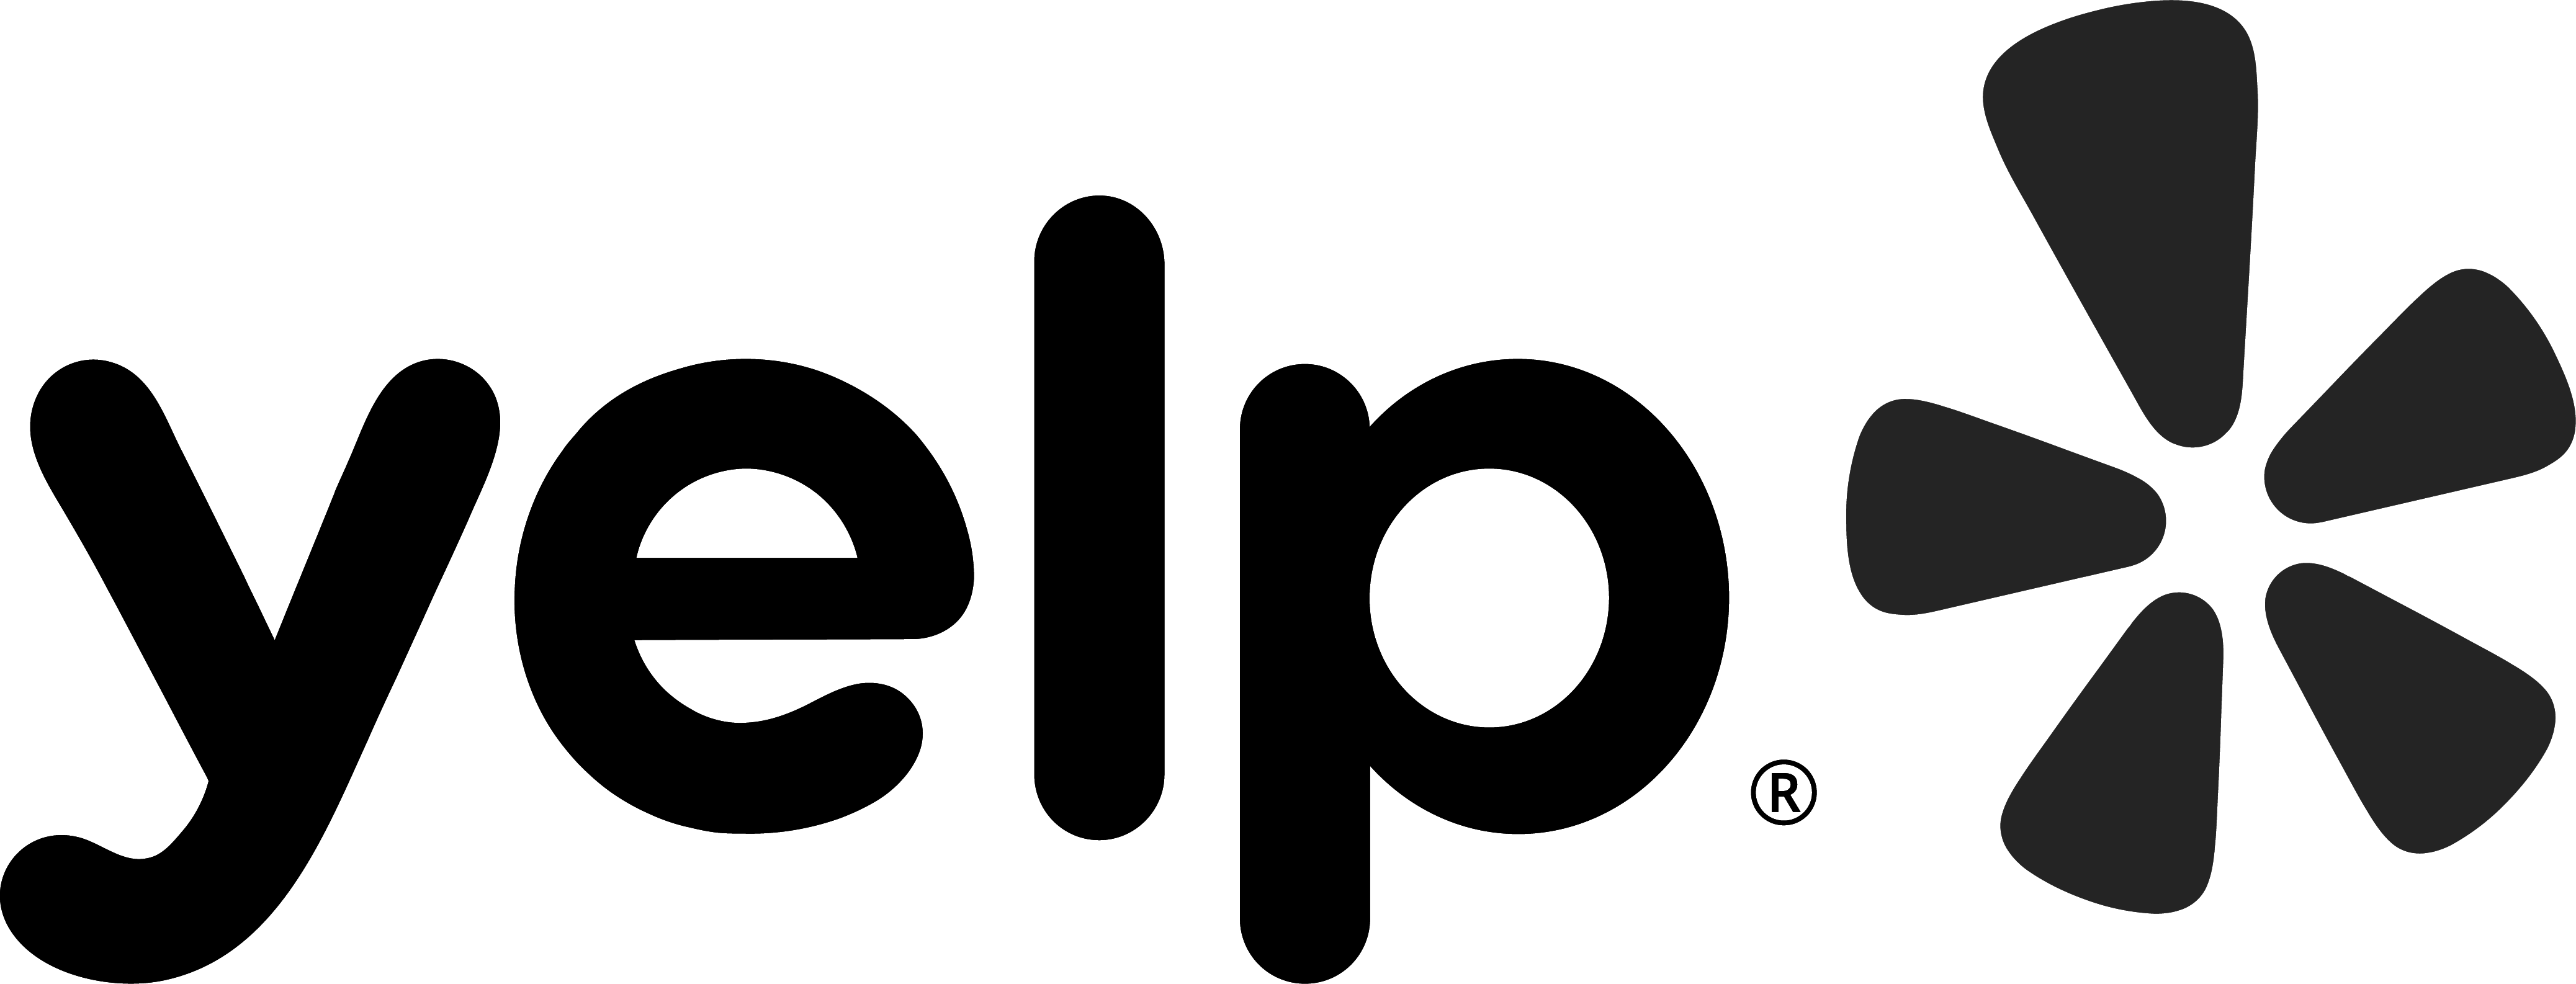 Logo Yelp color